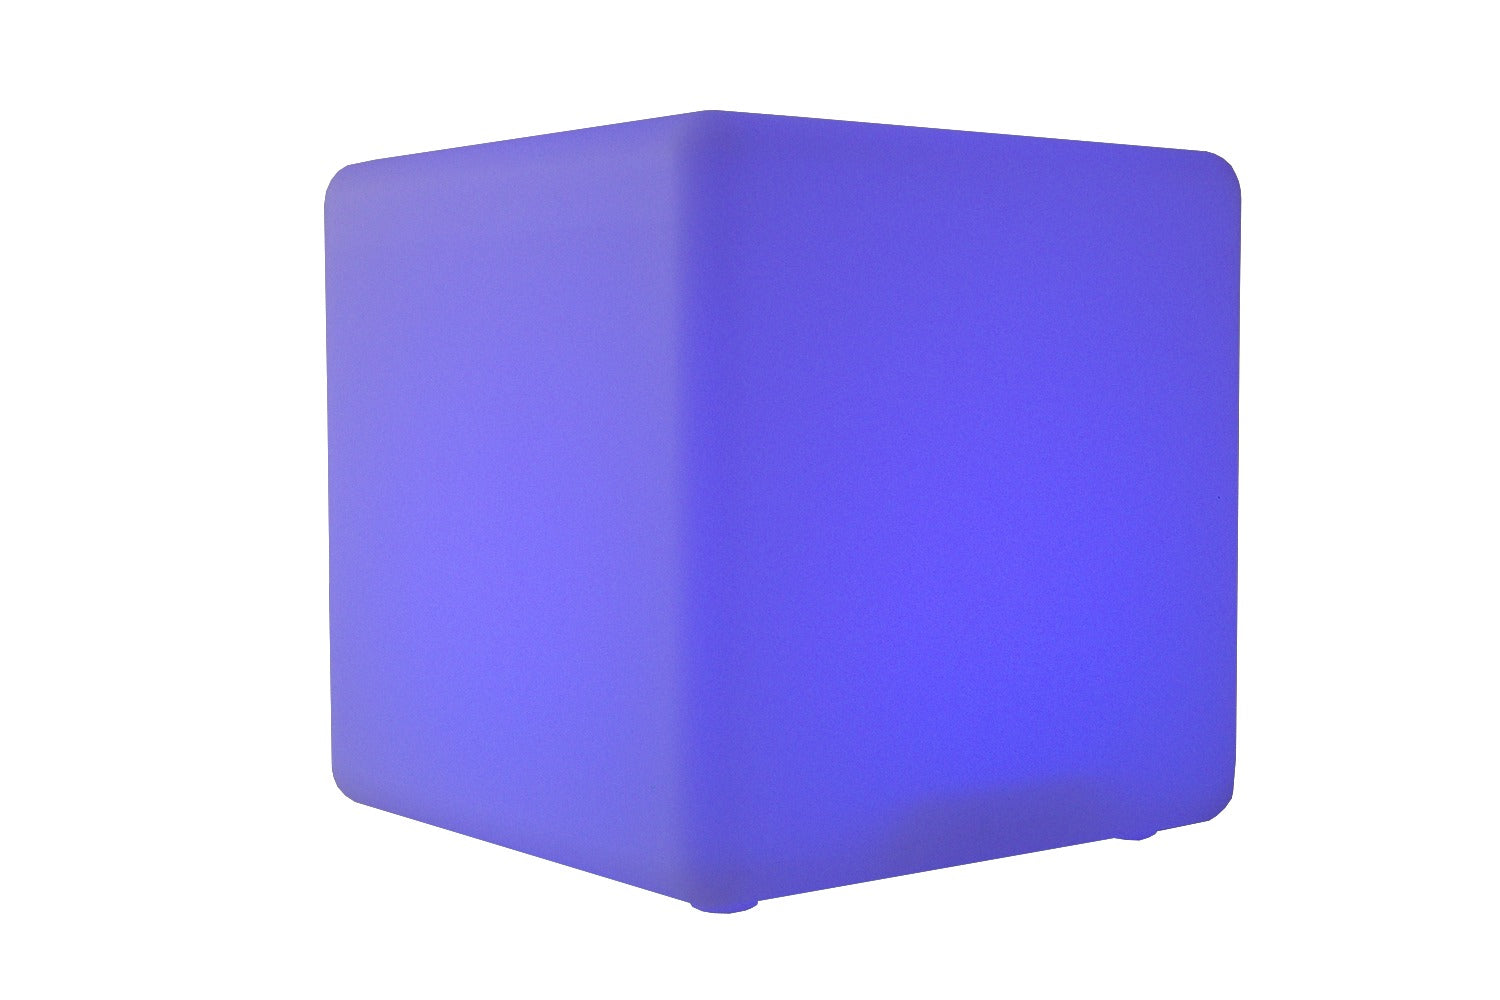 CUBECHAIR60 - LED cube chair seat 60x60x60cm